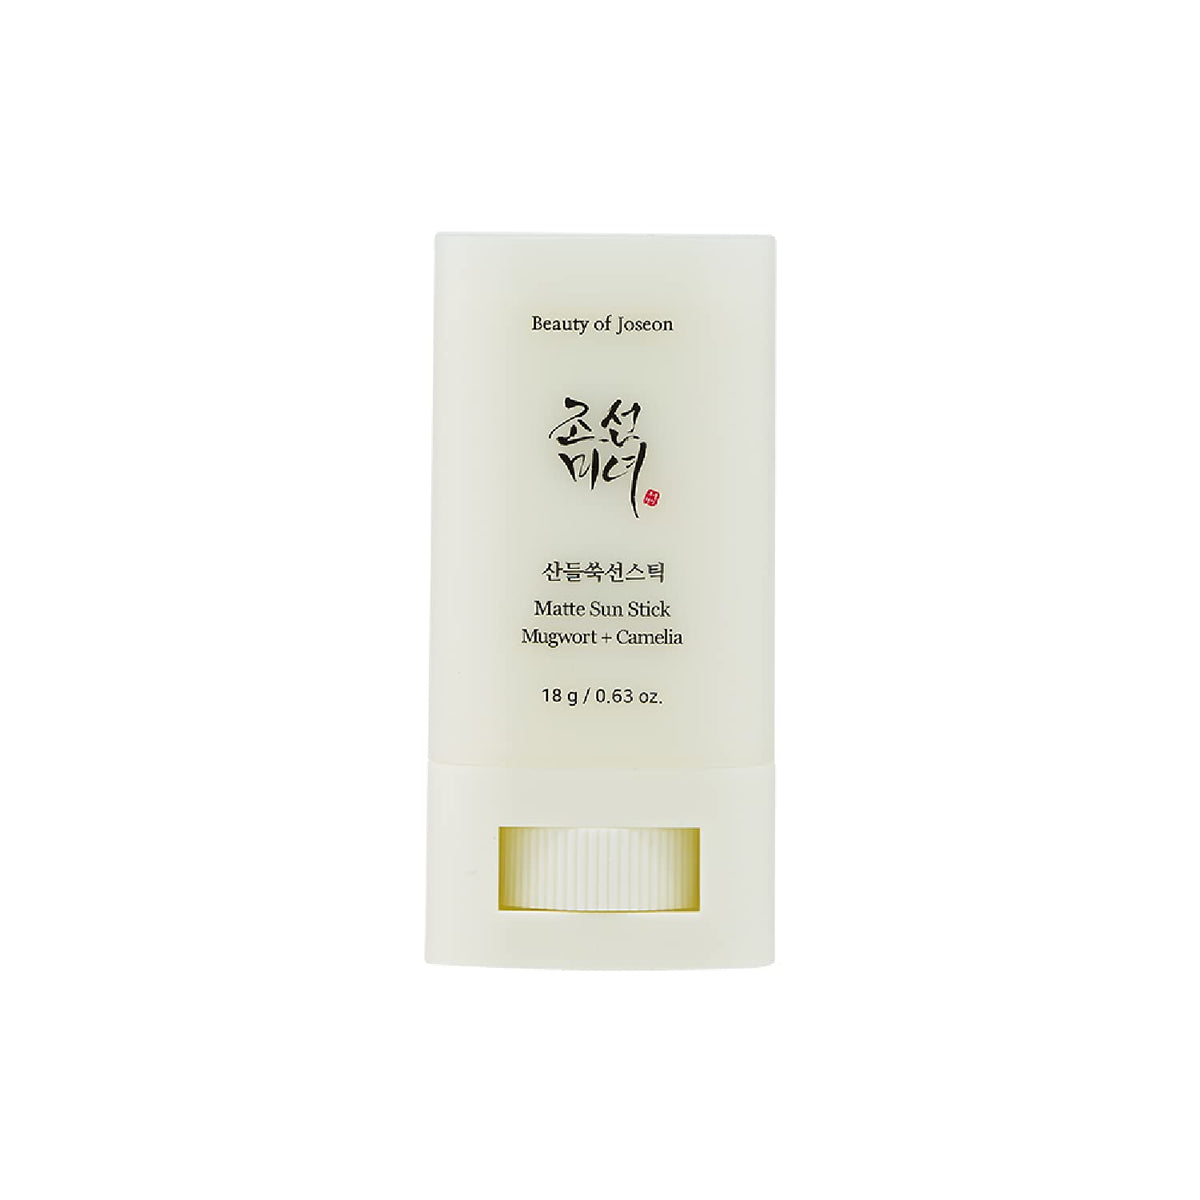 Beauty of Joseon - Matte Sun Stick Mugwort + Camelia 18g